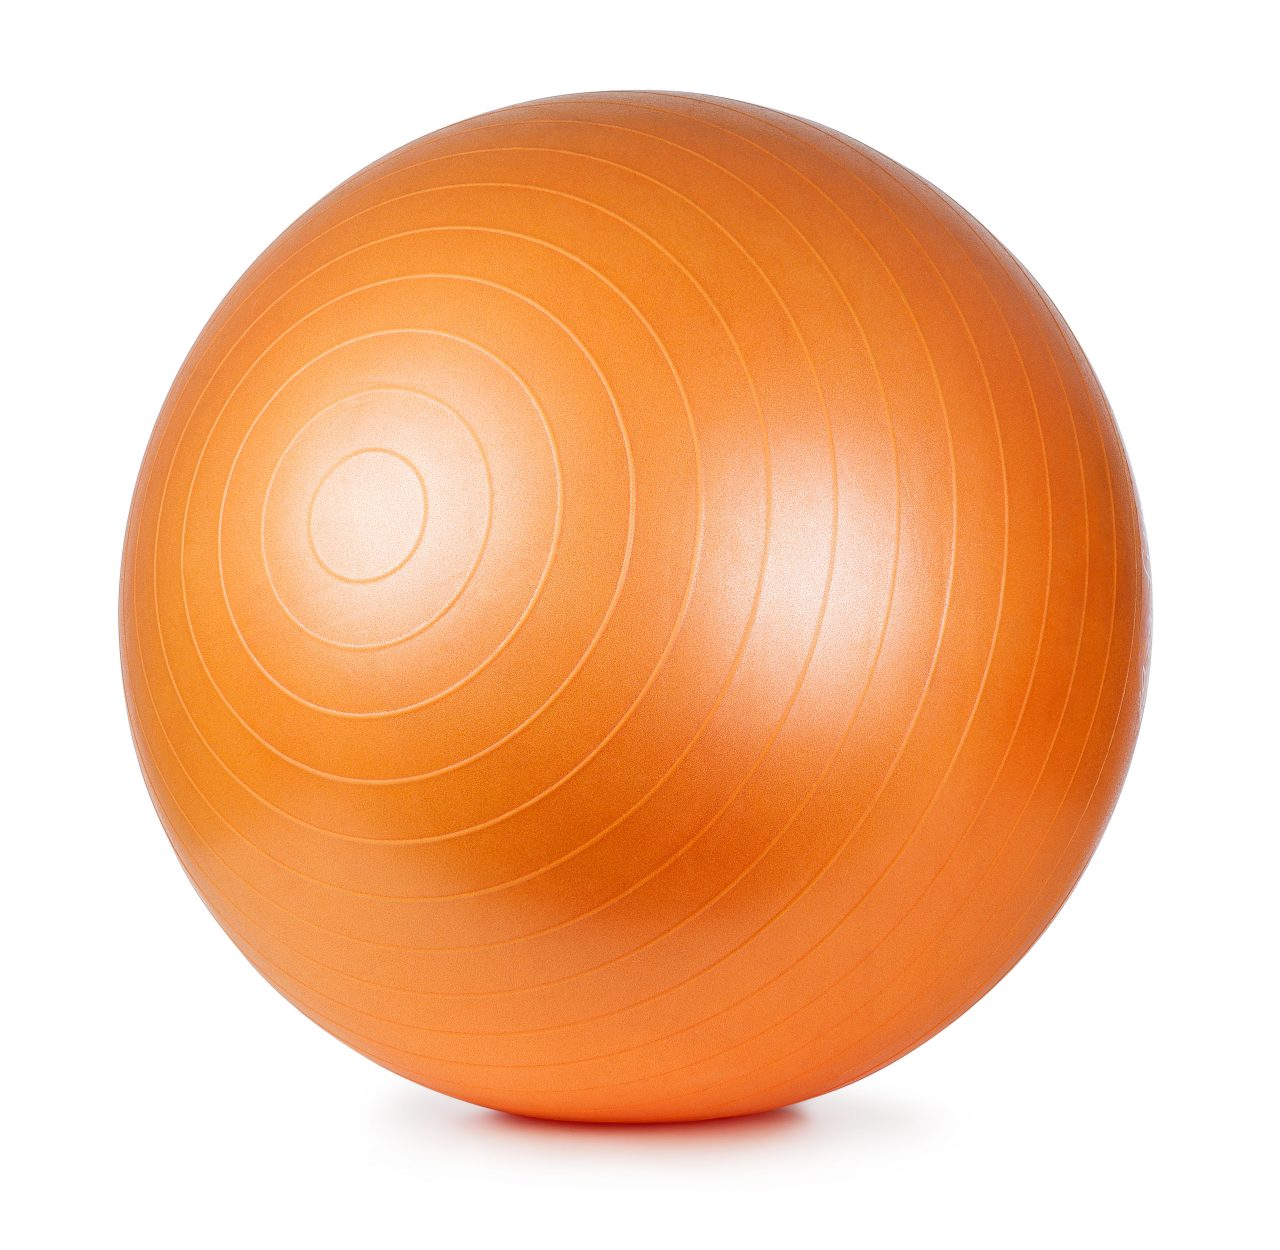 Orange fitness ball